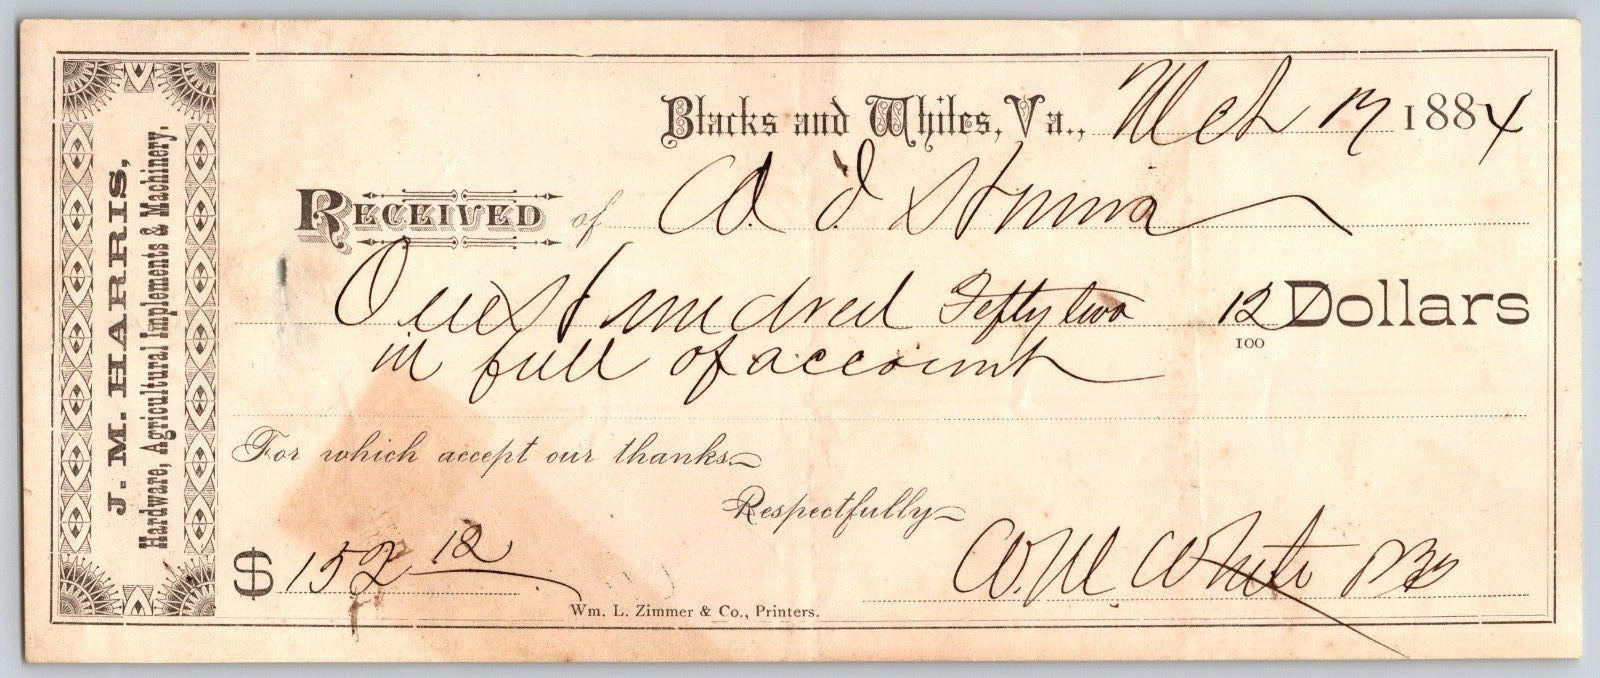 Blacks and Whites, VA (Blackstone) 1884 J.M Harris Bank Check - Very Scarce